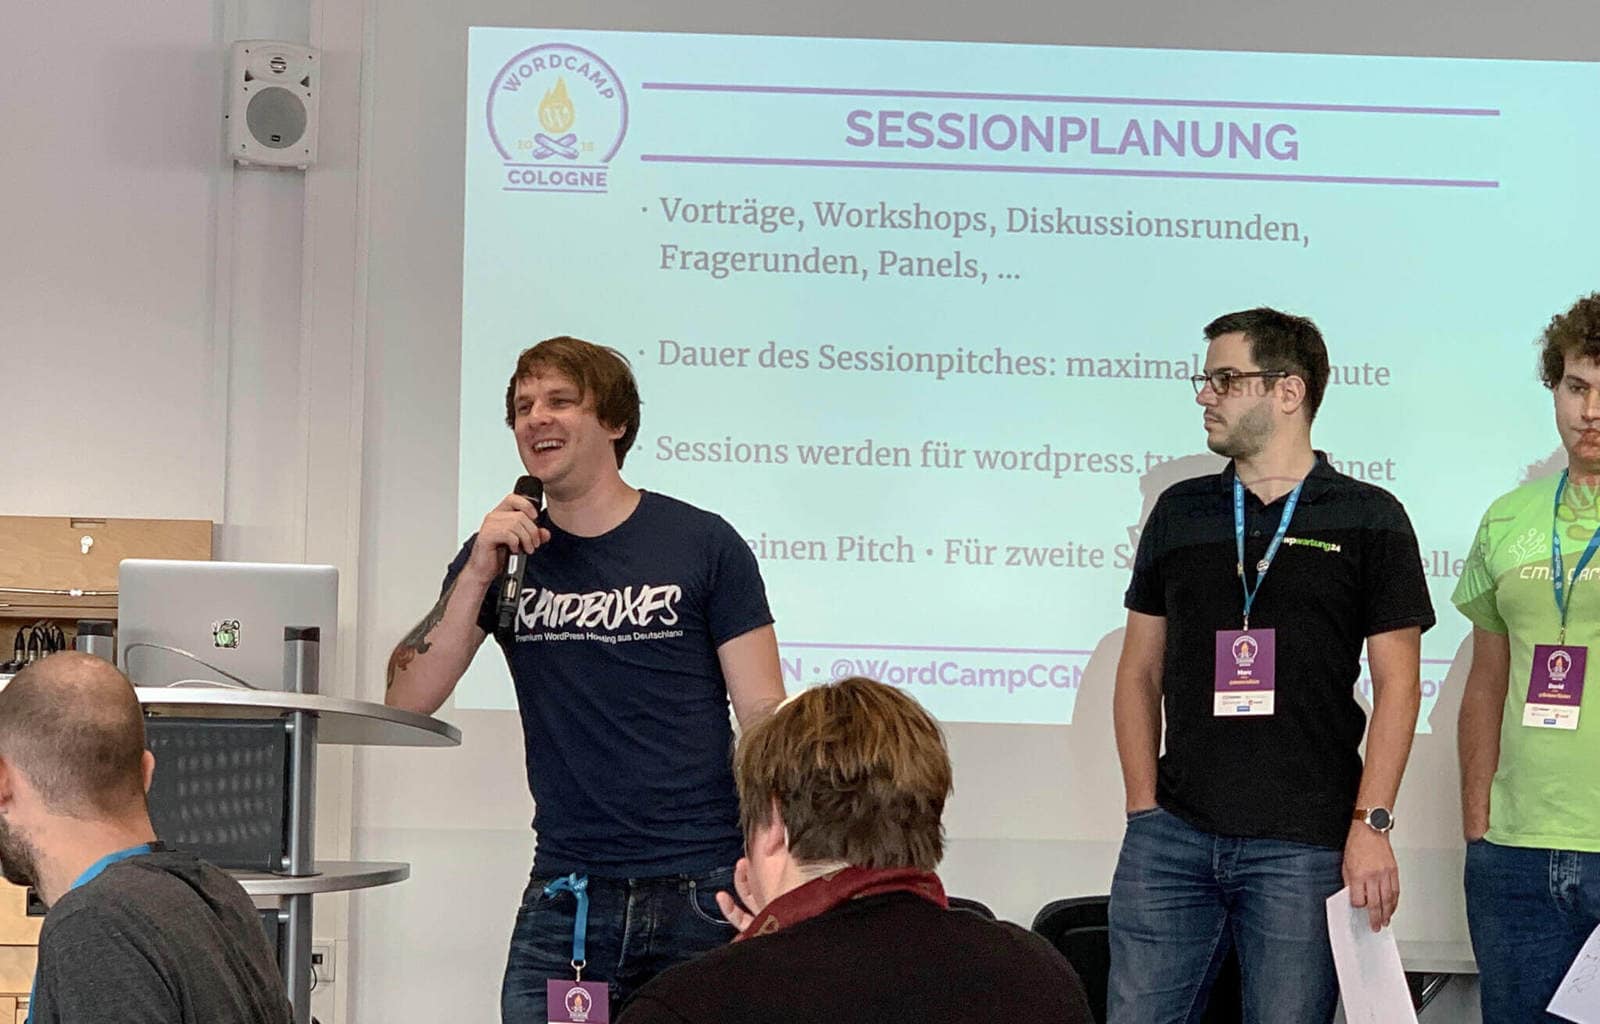 WordCamp Keulen: Matthias von Raidboxes bij de sessie pitch